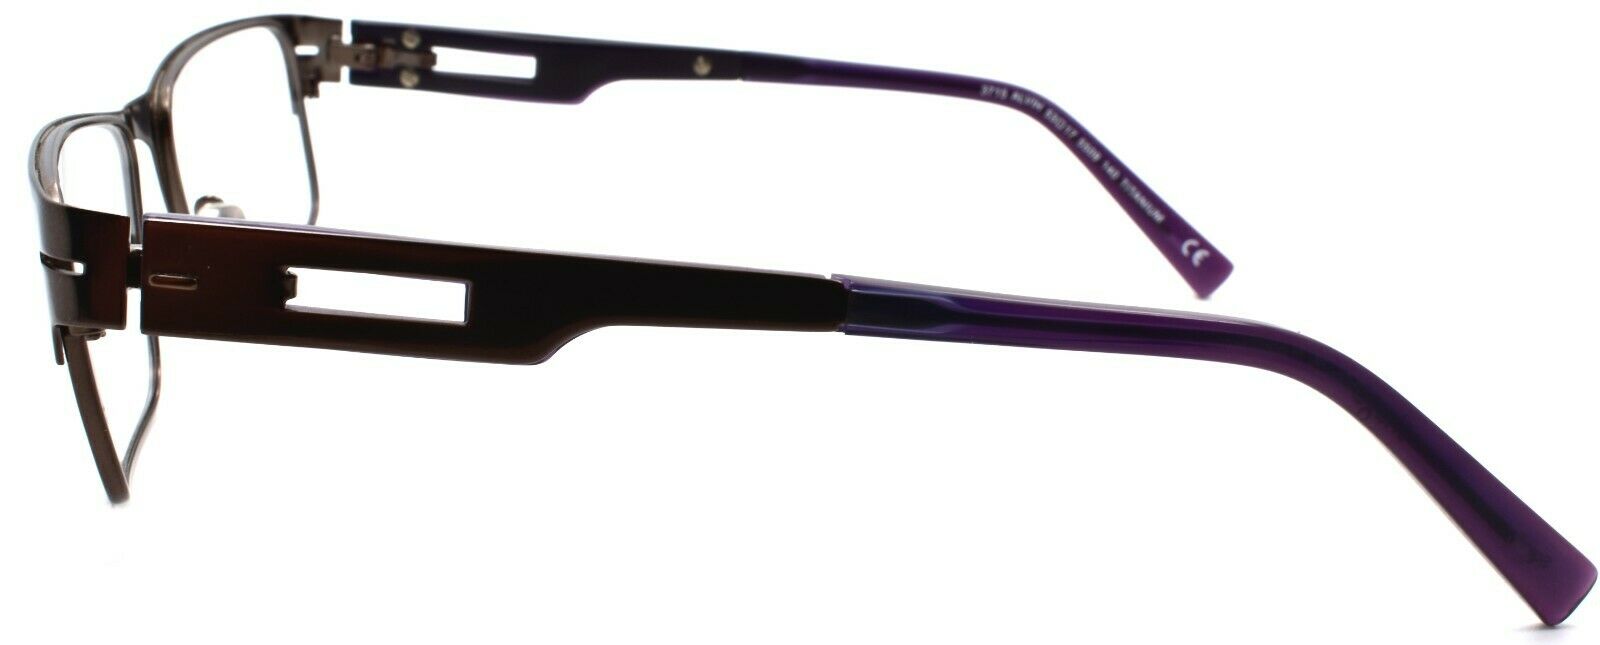 3-Skaga 3715 Alvih 5509 Men's Eyeglasses Frames 53-17-140 Gunmetal-IKSpecs